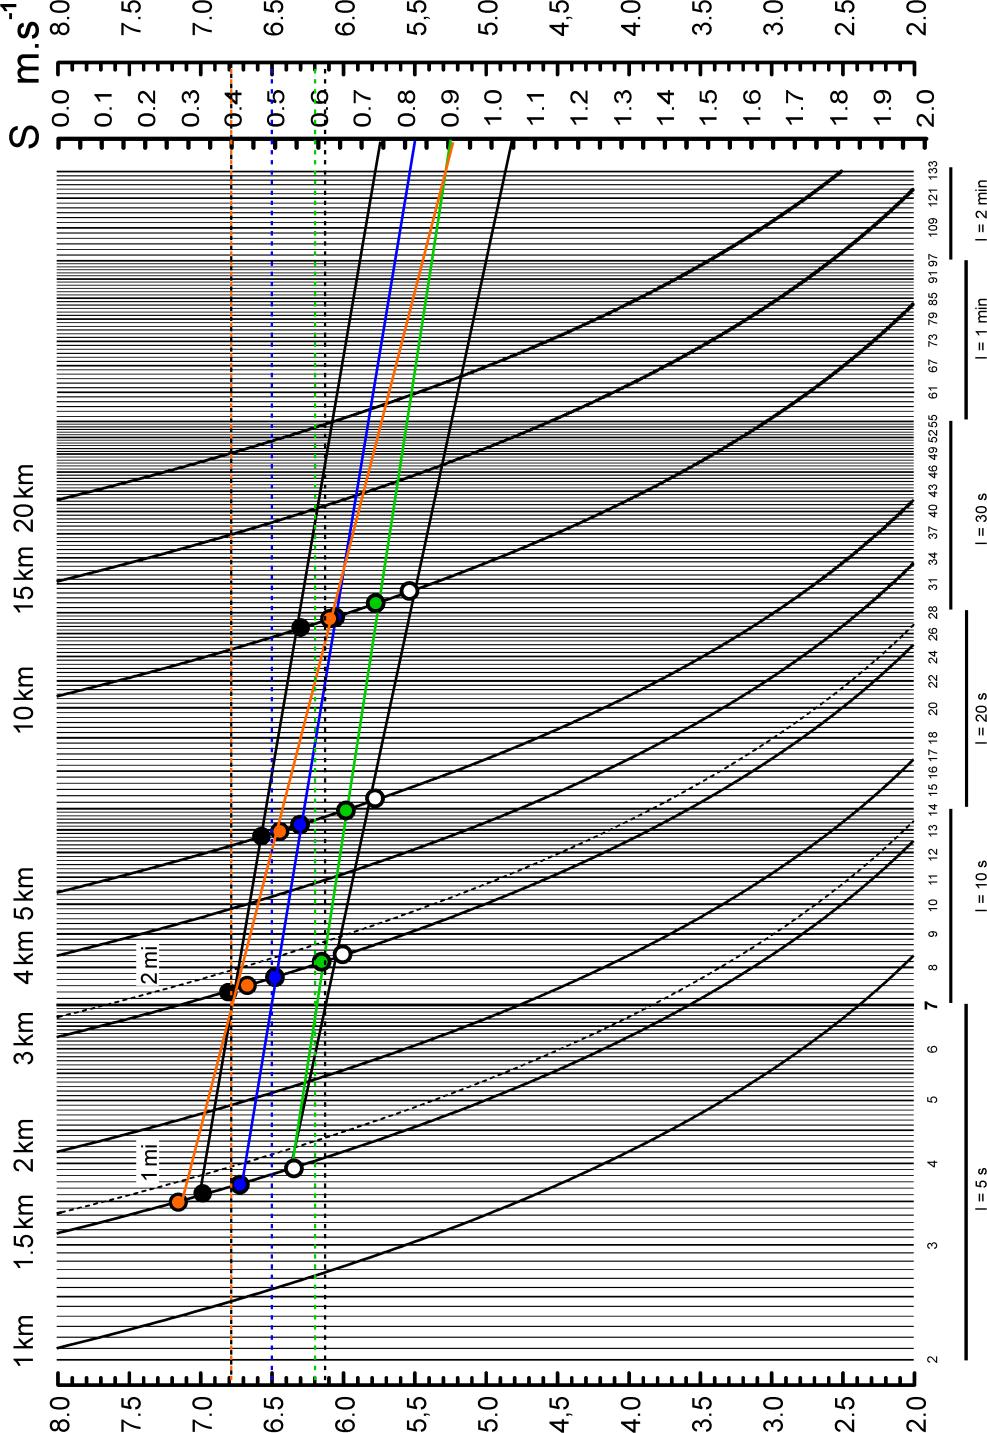 Figure 5: performances of elite endurance runners. I = intervals between vertical lines (from 5 s to 2 min). Black dots : Gebrselassie. Orange dots: Aouita. Blue dots: Virén. Green dots: Zatopek.